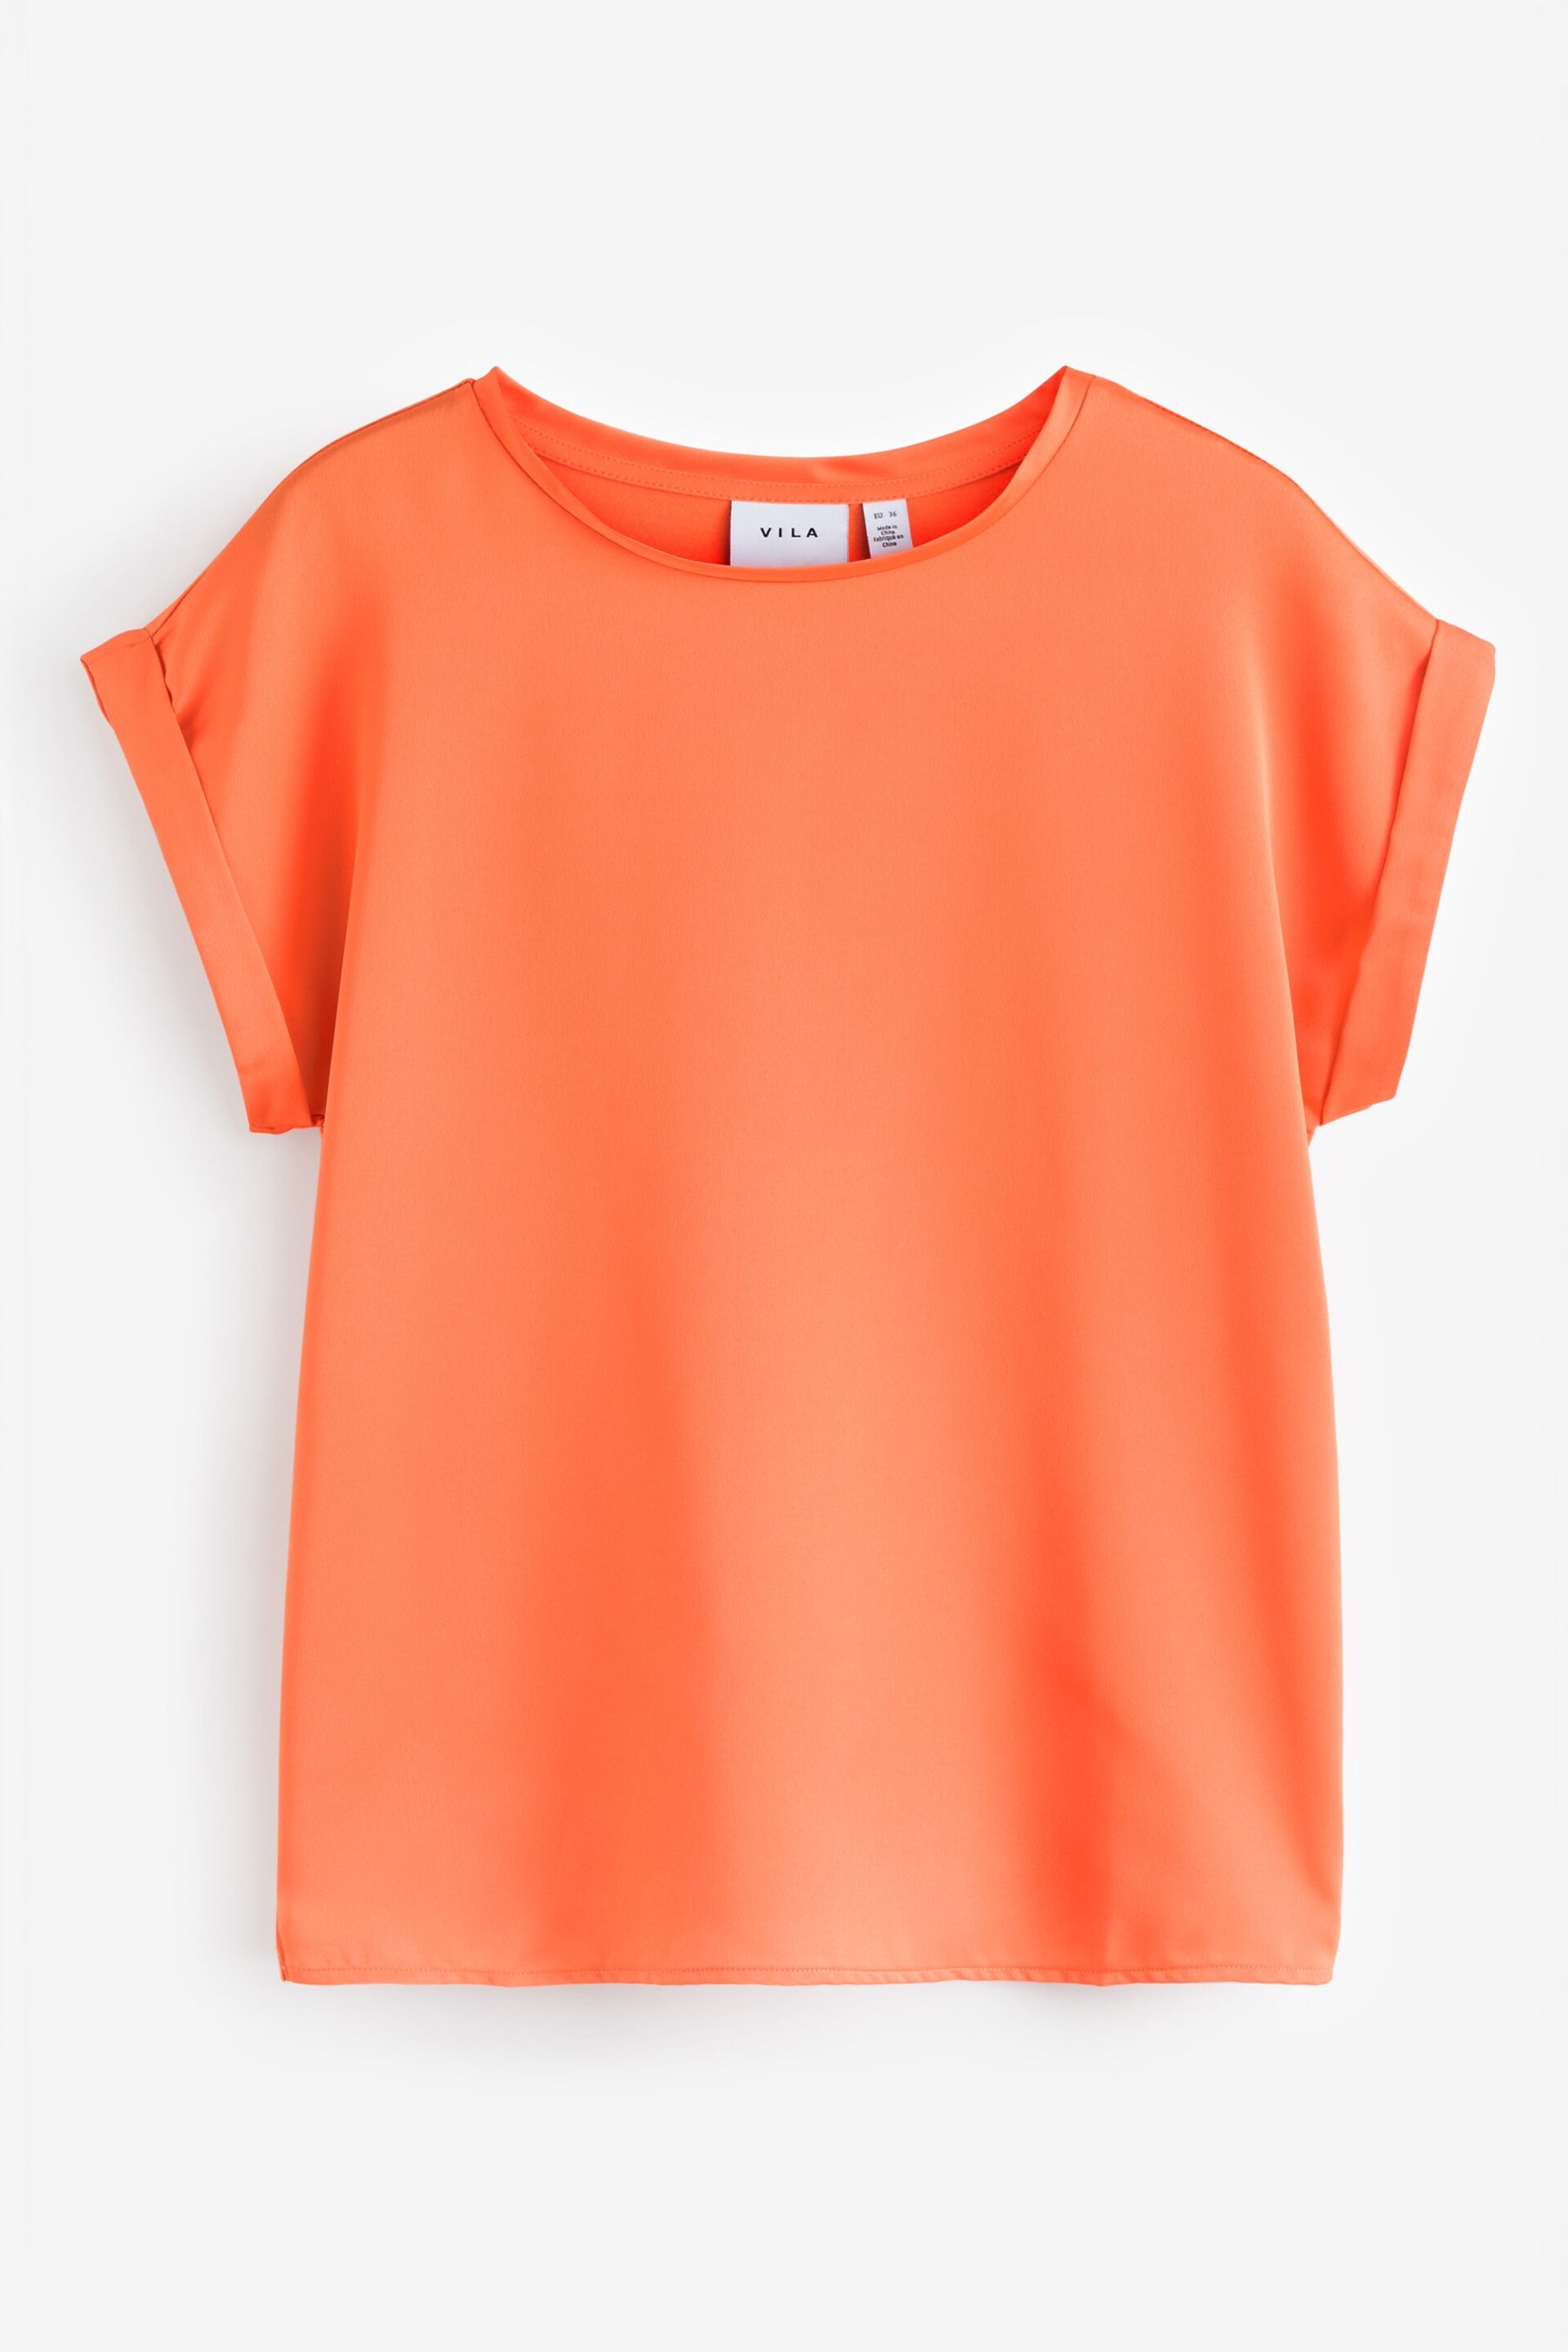 VILA Orange Short Sleeve Satin and Jersey Top - Image 5 of 5